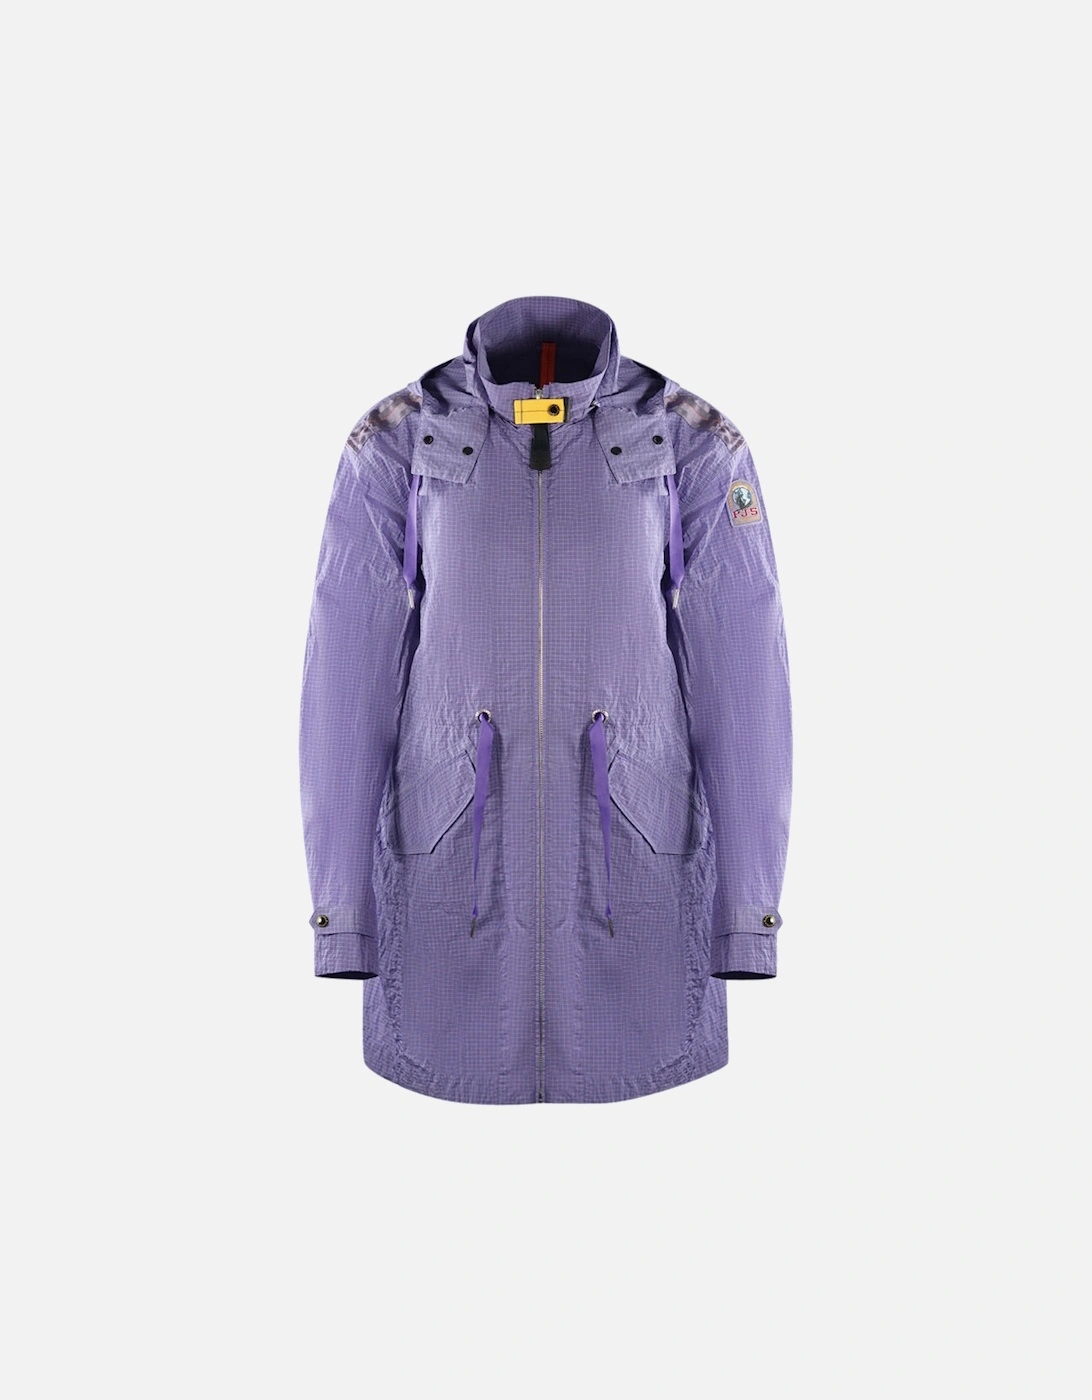 Suwa Amethyst Purple Jacket, 3 of 2